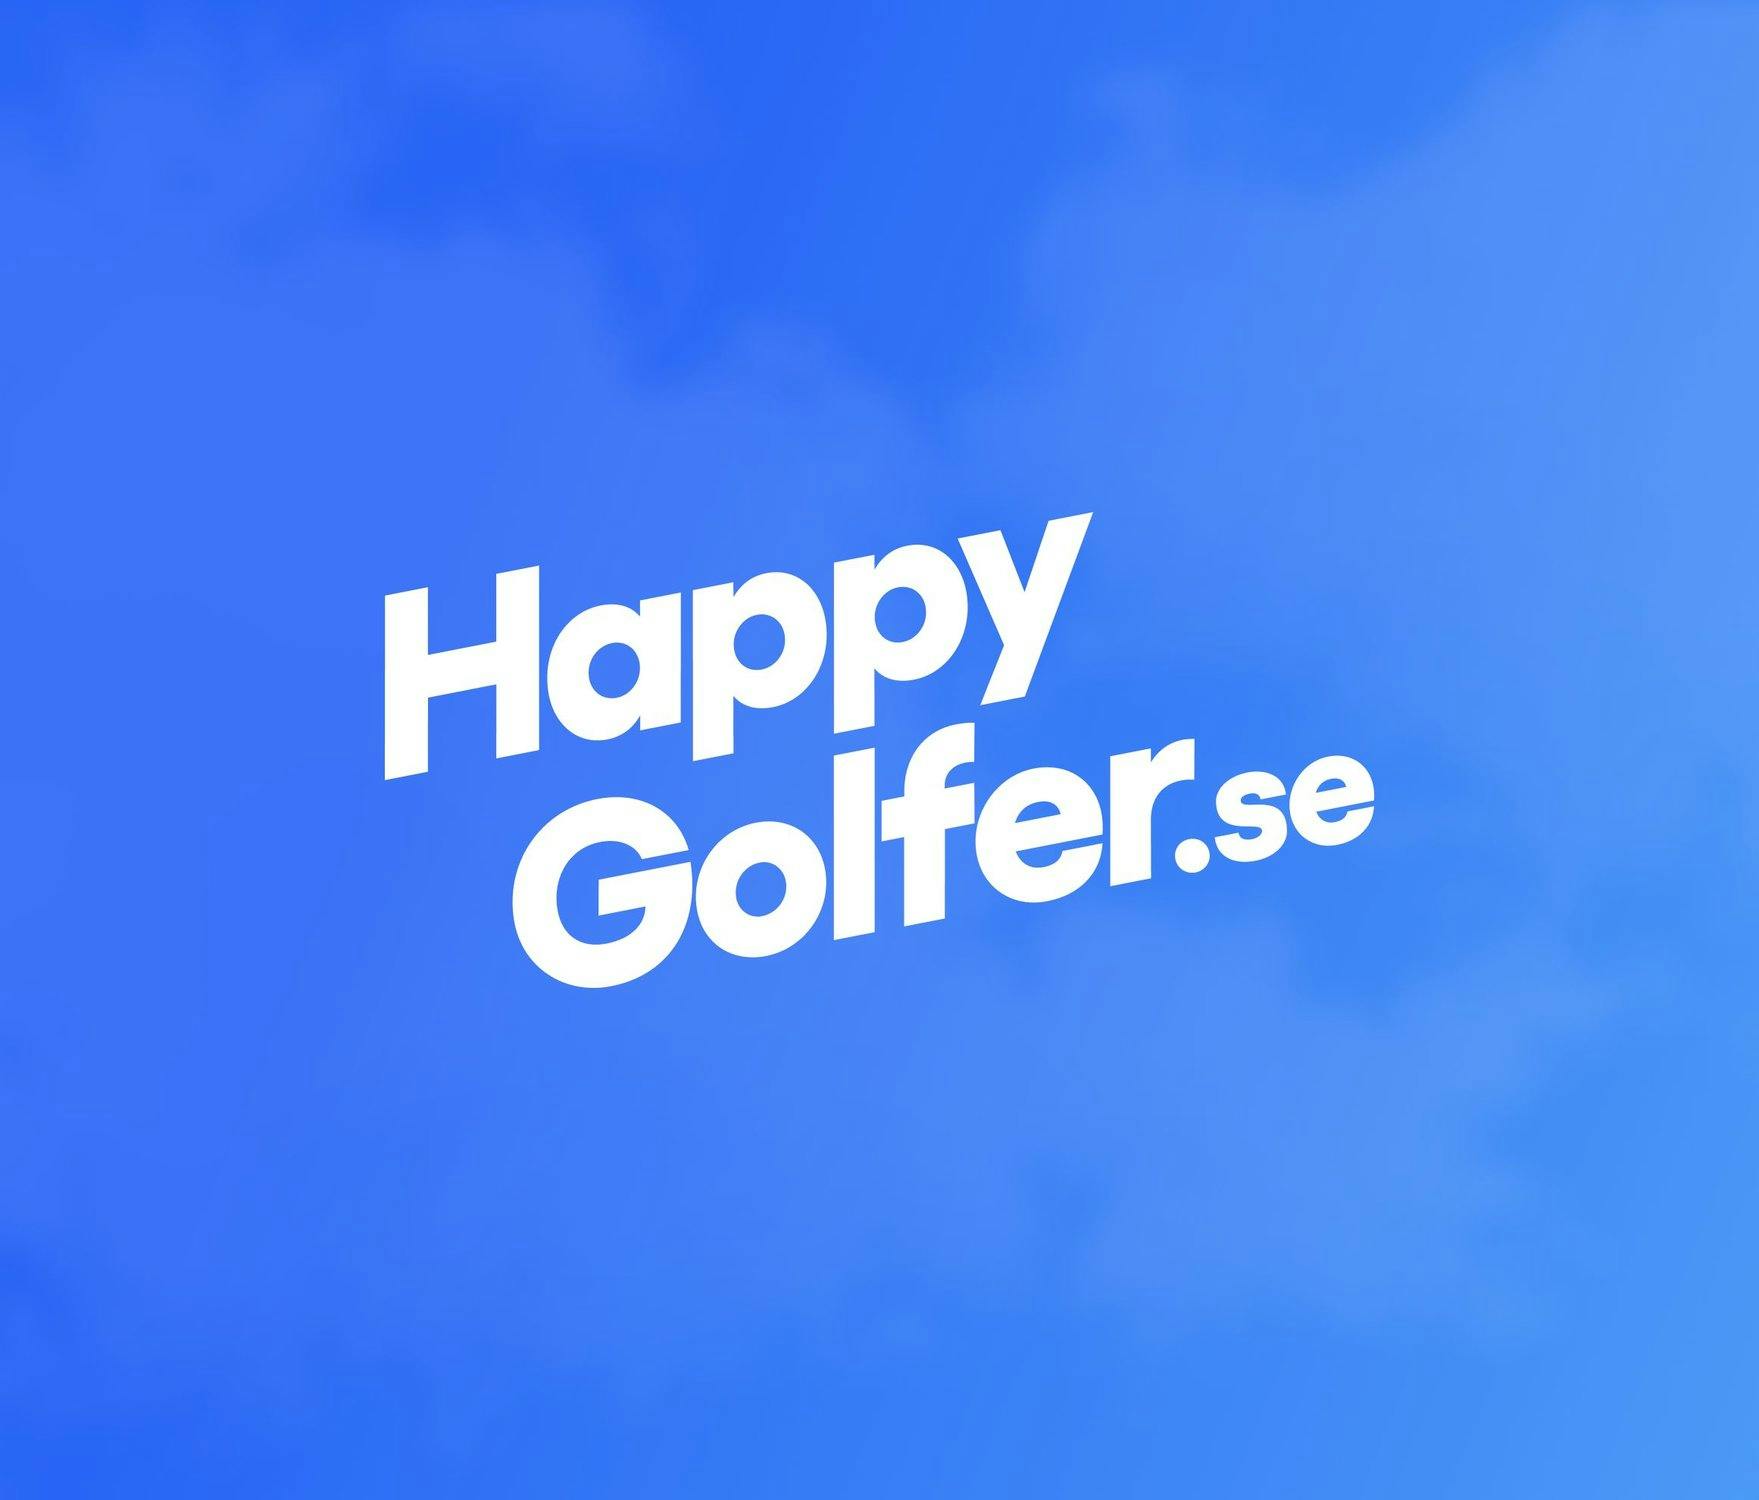 Happy Golfer